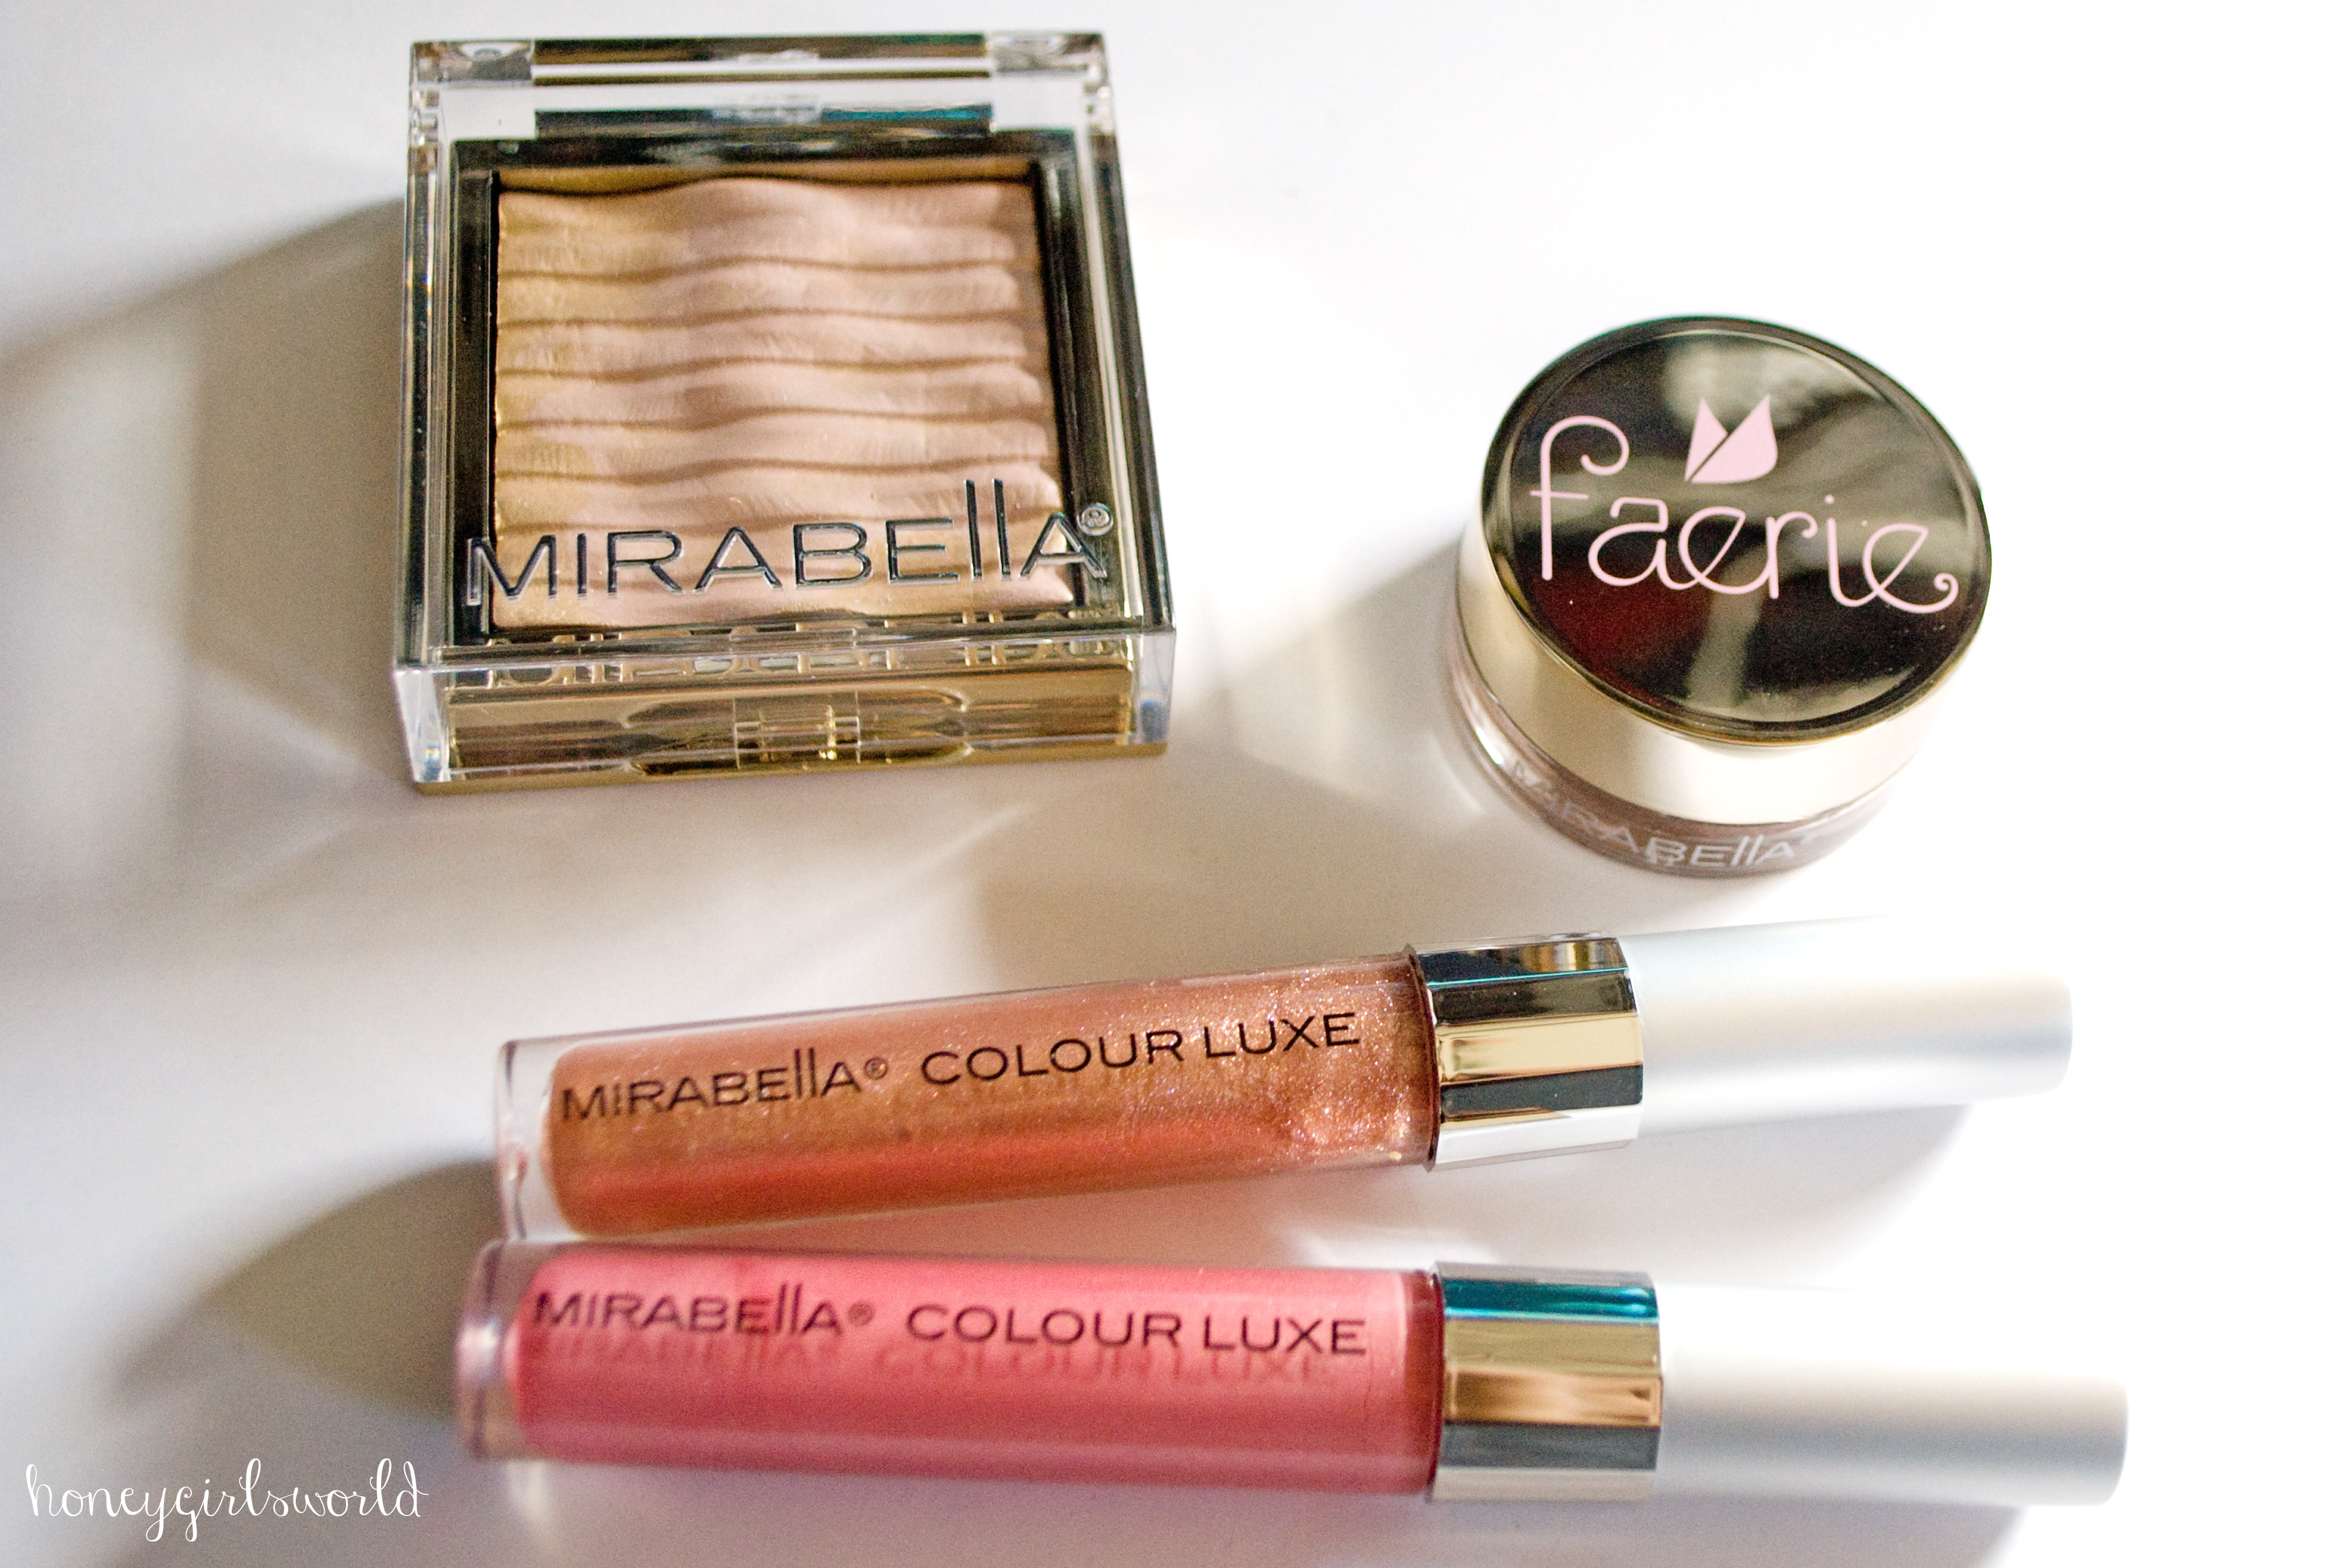 Mirabella Cosmetics Faerie